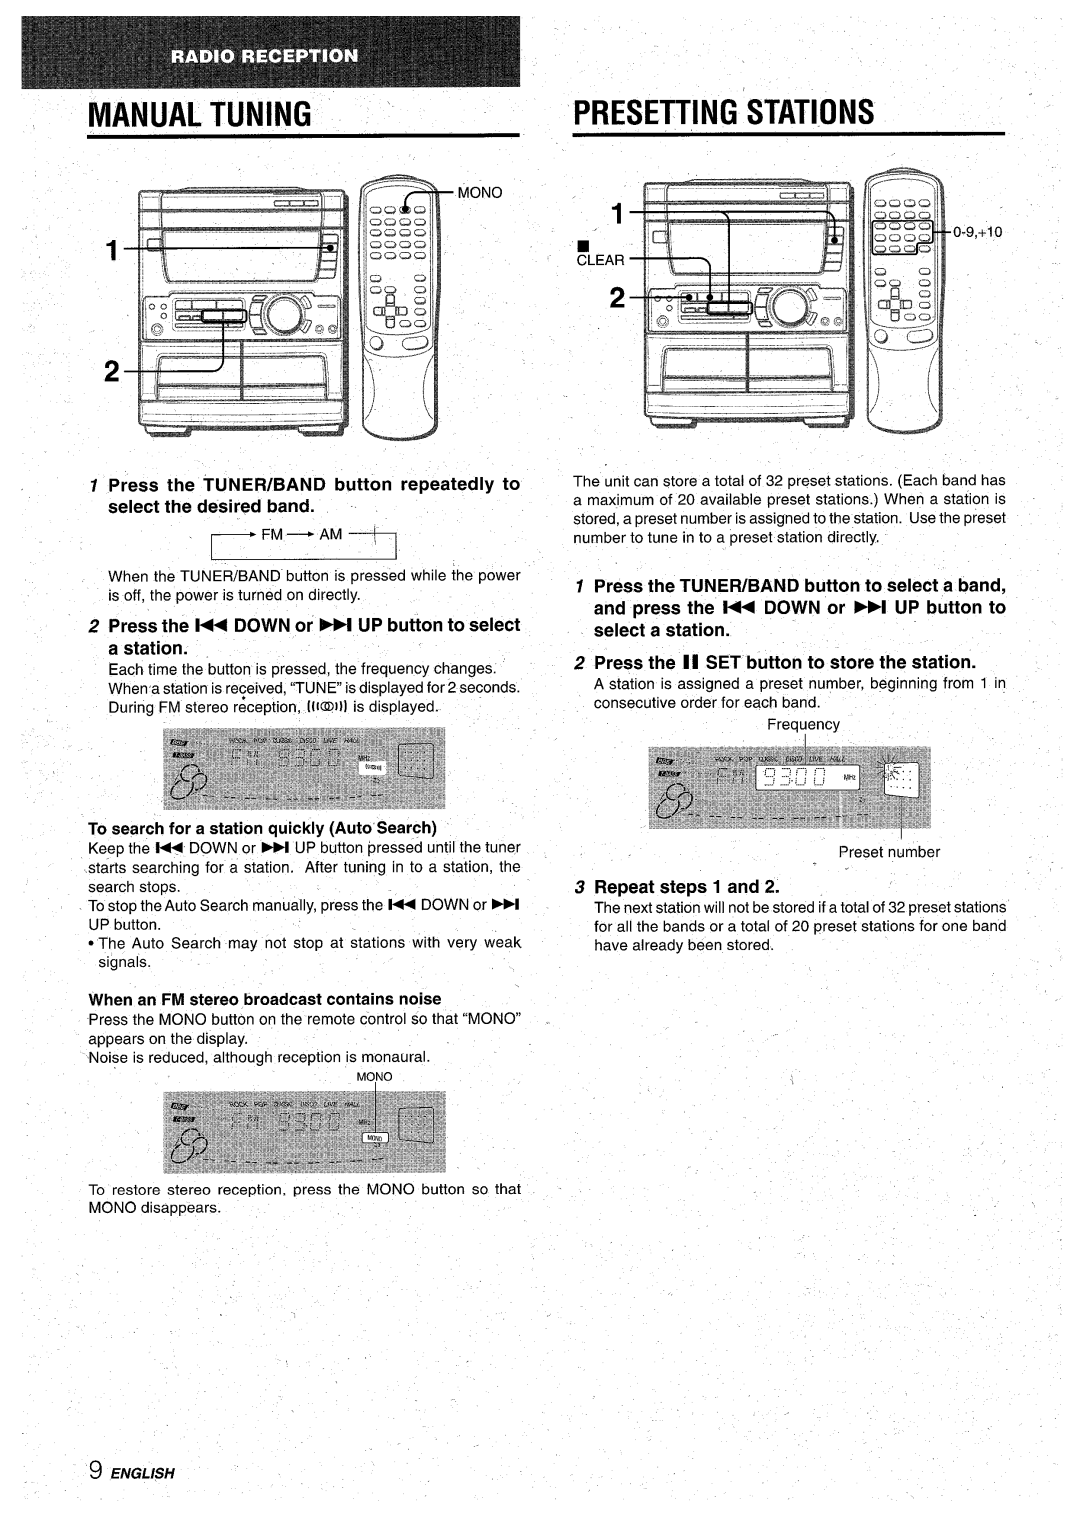 Aiwa CX-NA71 manual Manual Tuning, Presetting Stati.Ons, Press the TUNER/BAND button repeatedly to select the desired band 